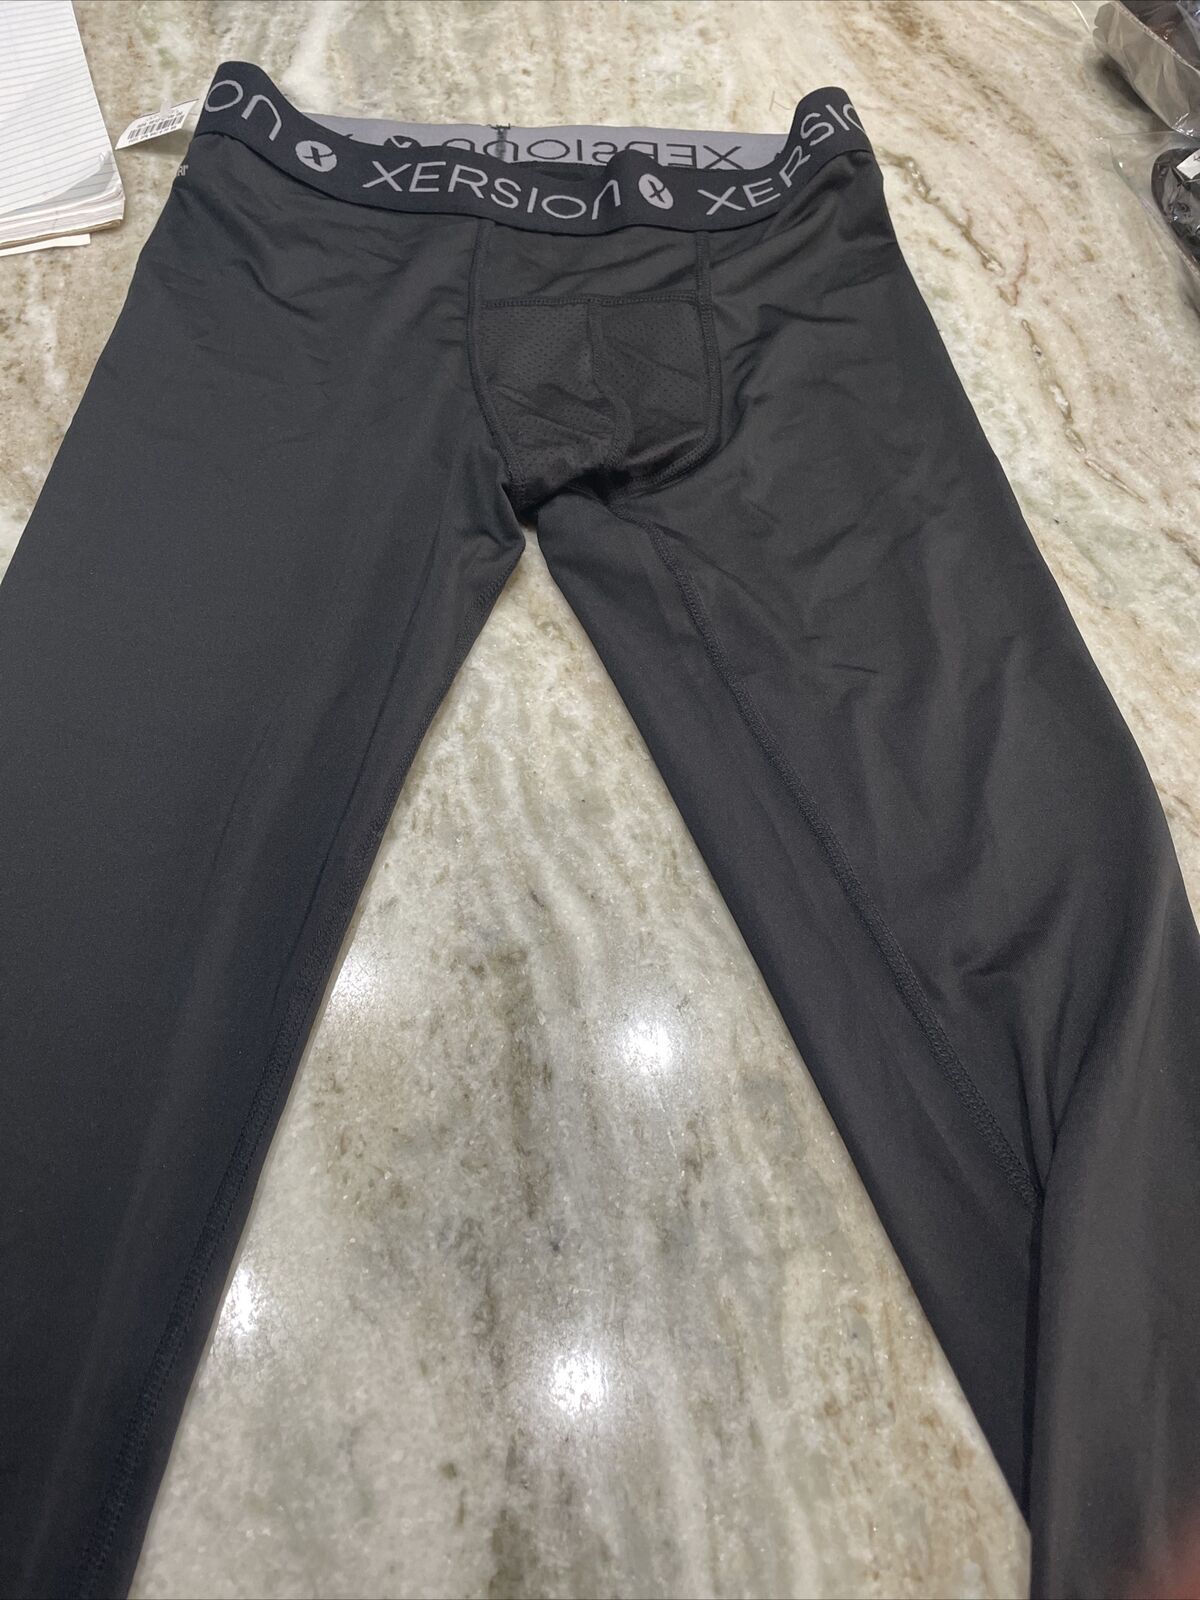 Primary image for Boys Xersion size medium 1012 regular long John pants black